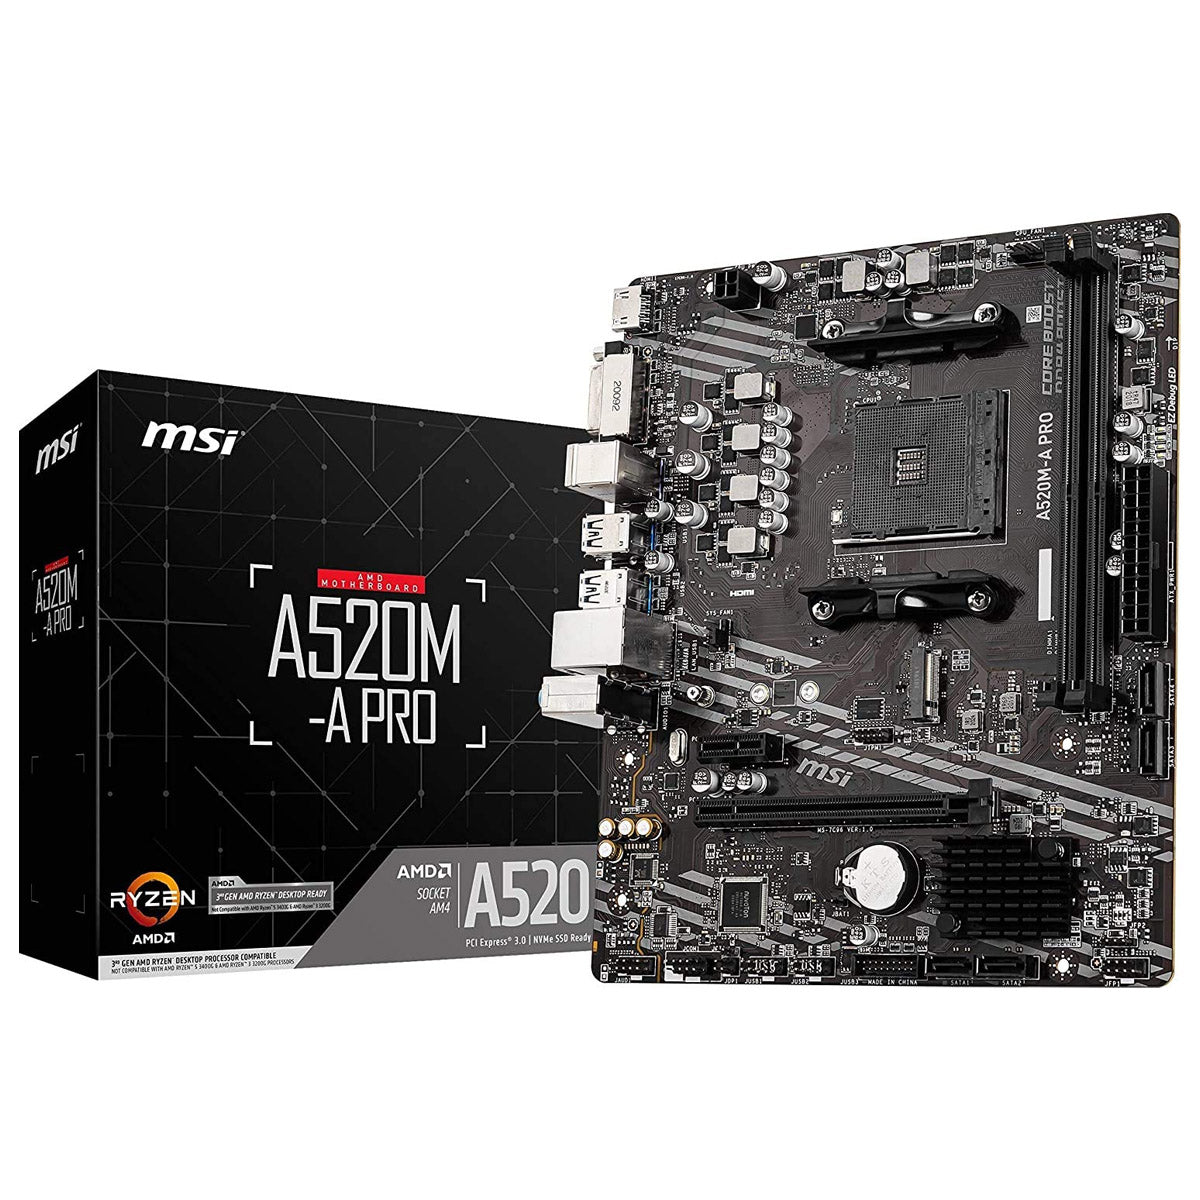 MSI A520M-A PRO AMD AM4 mATX मदरबोर्ड कोर बूस्ट और ऑडियो बूस्ट के साथ